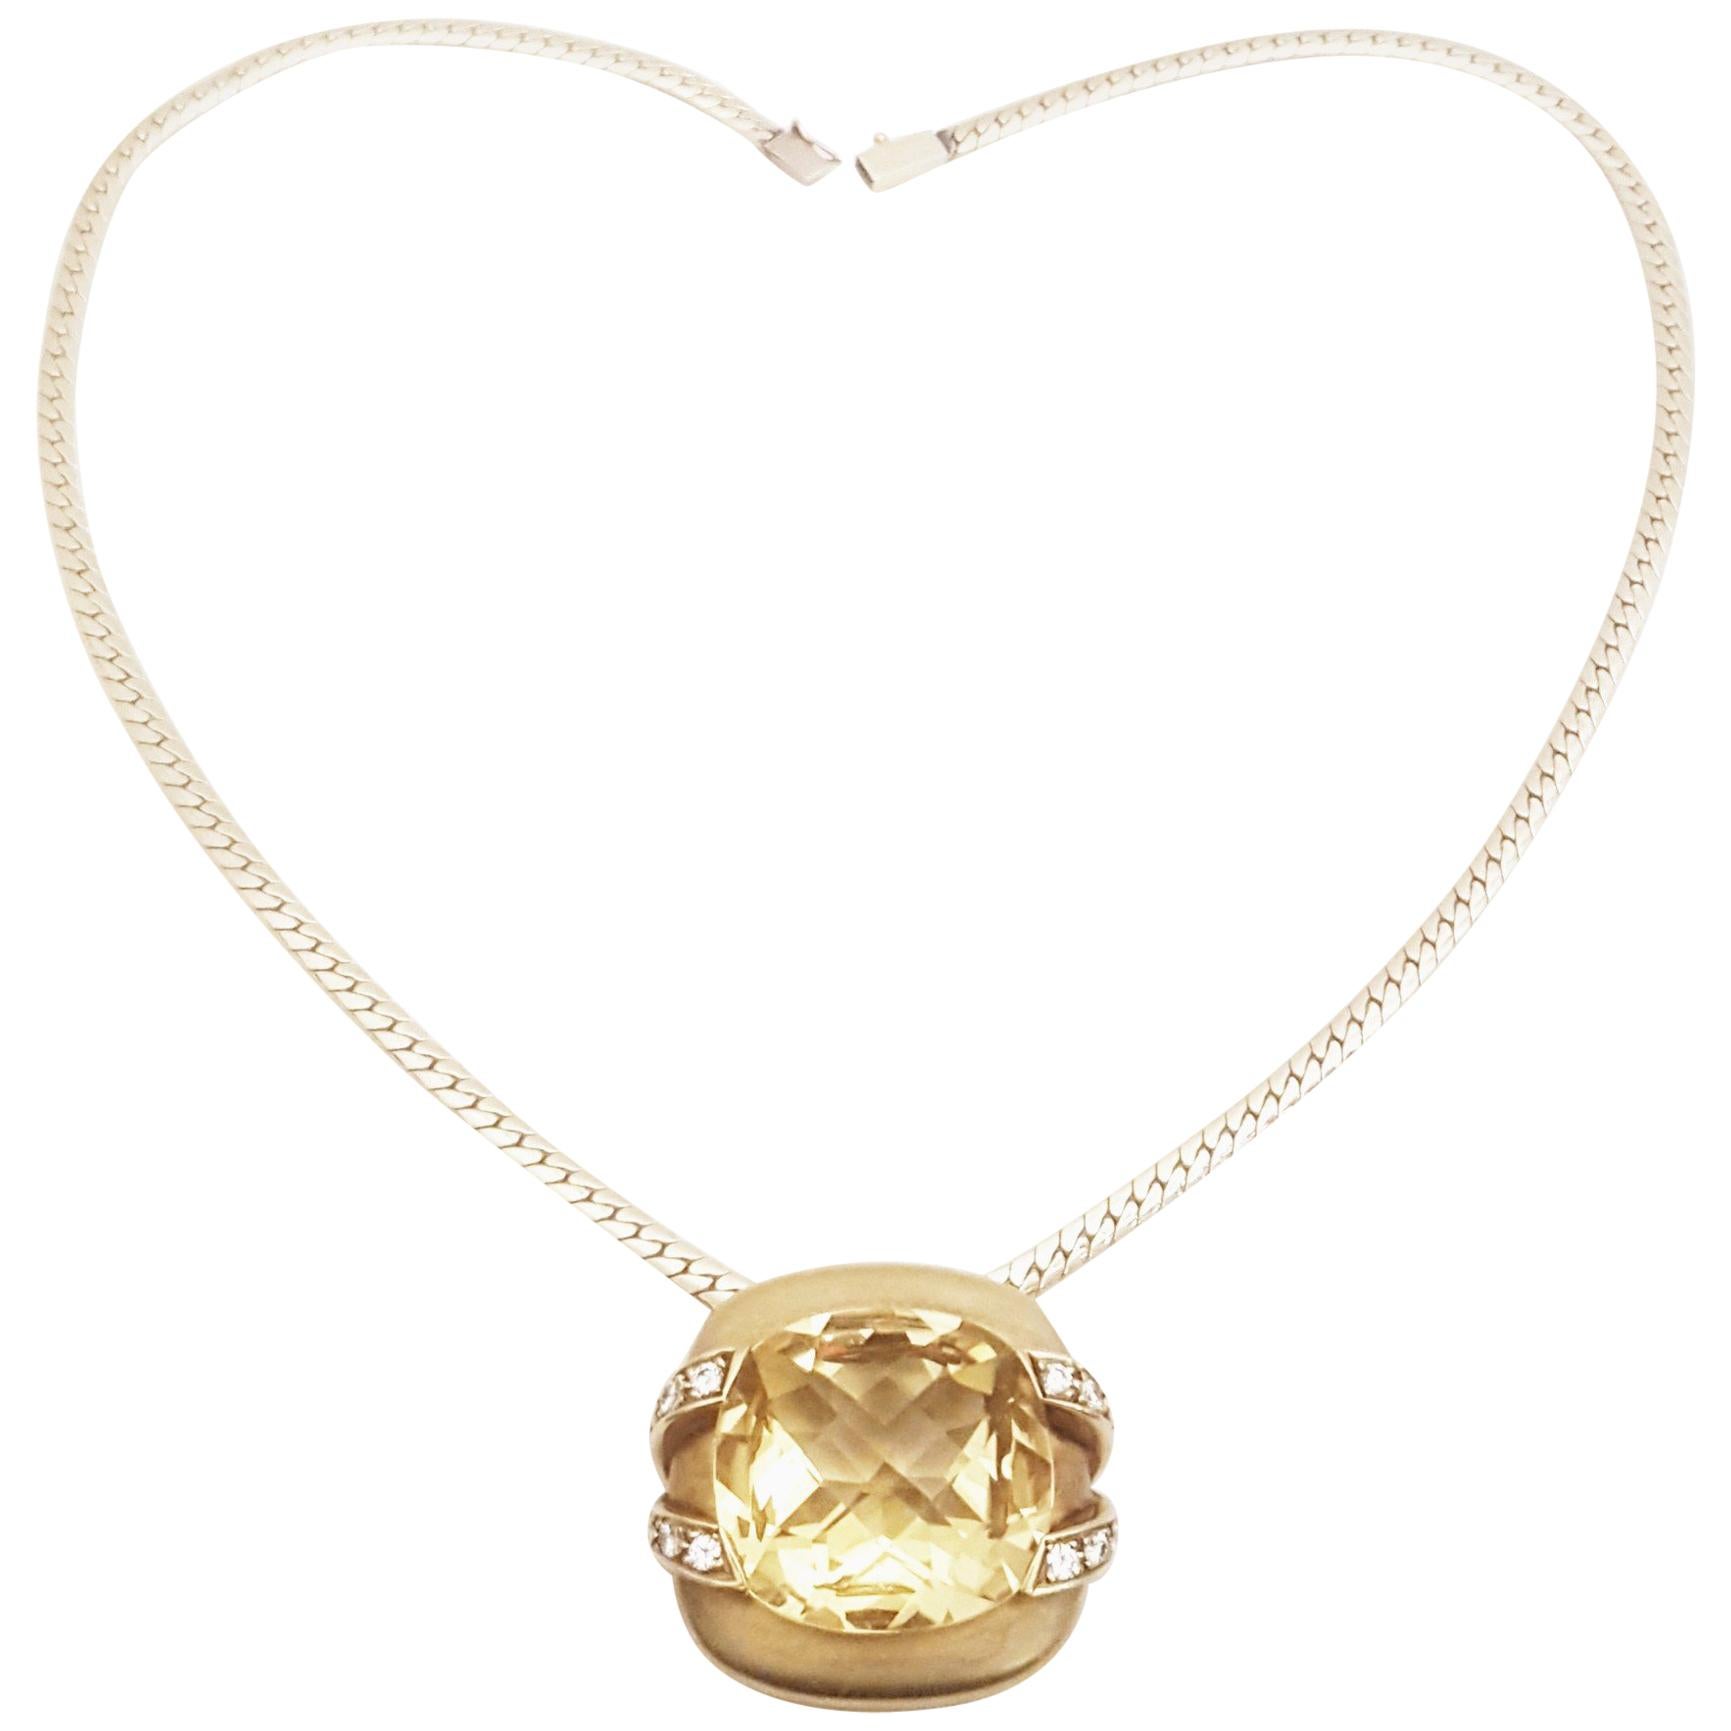 Marlene Stowe 18 Karat Diamond and Citrine Convertible Brooch/Pendant For Sale